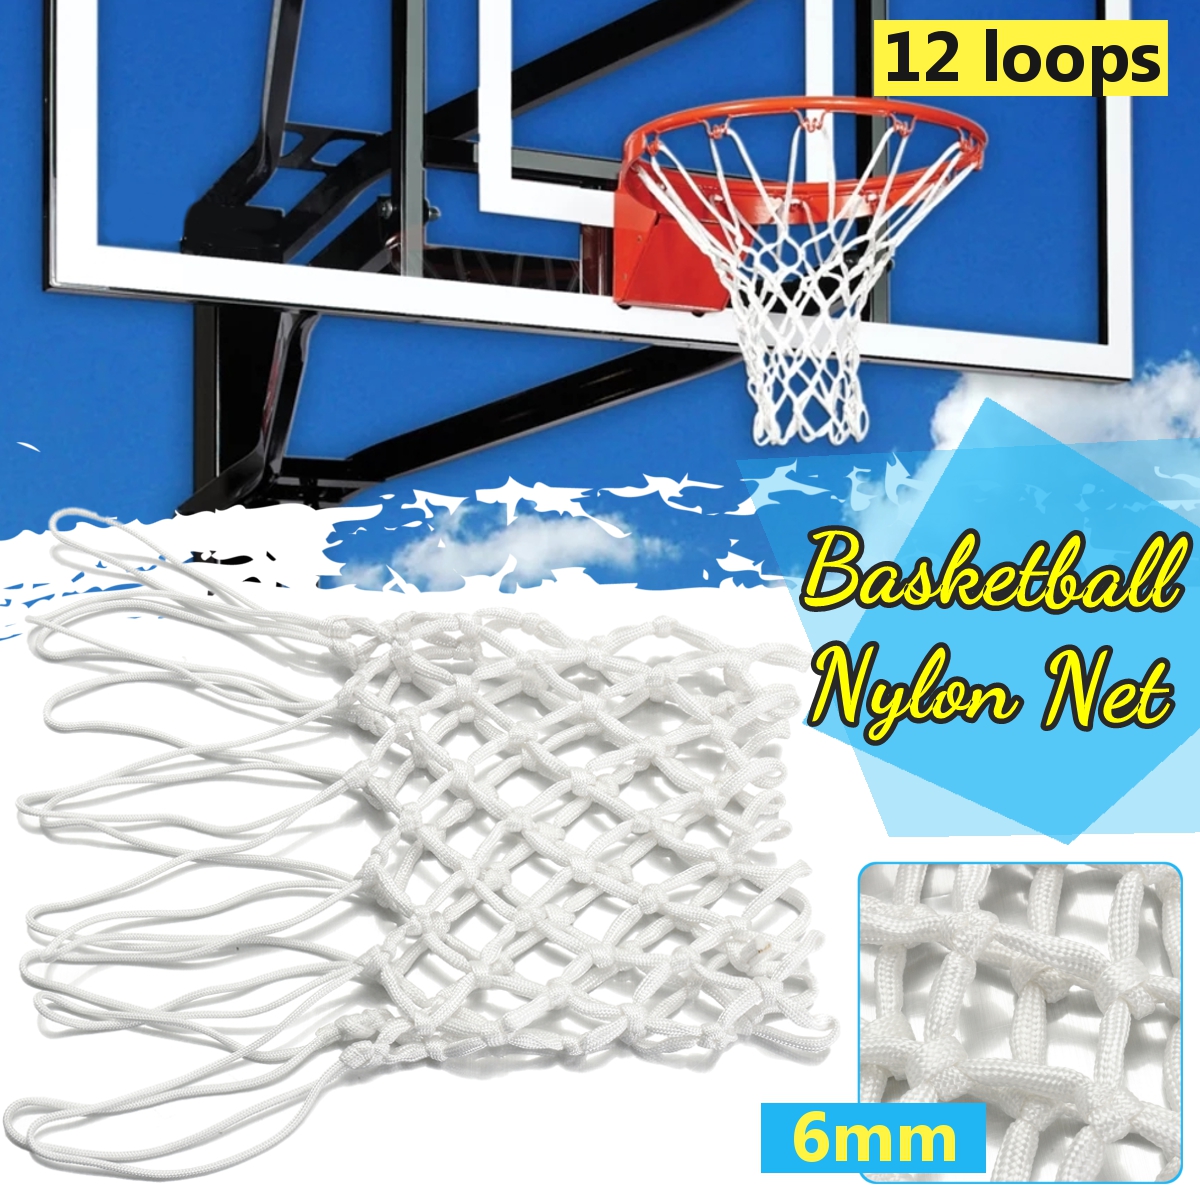 50cm-Kids-Basketball-Net-12-Loop-Basketball-Hoop-Mesh-Professional-Replacement-Net-Children-Outdoor--1195083-1